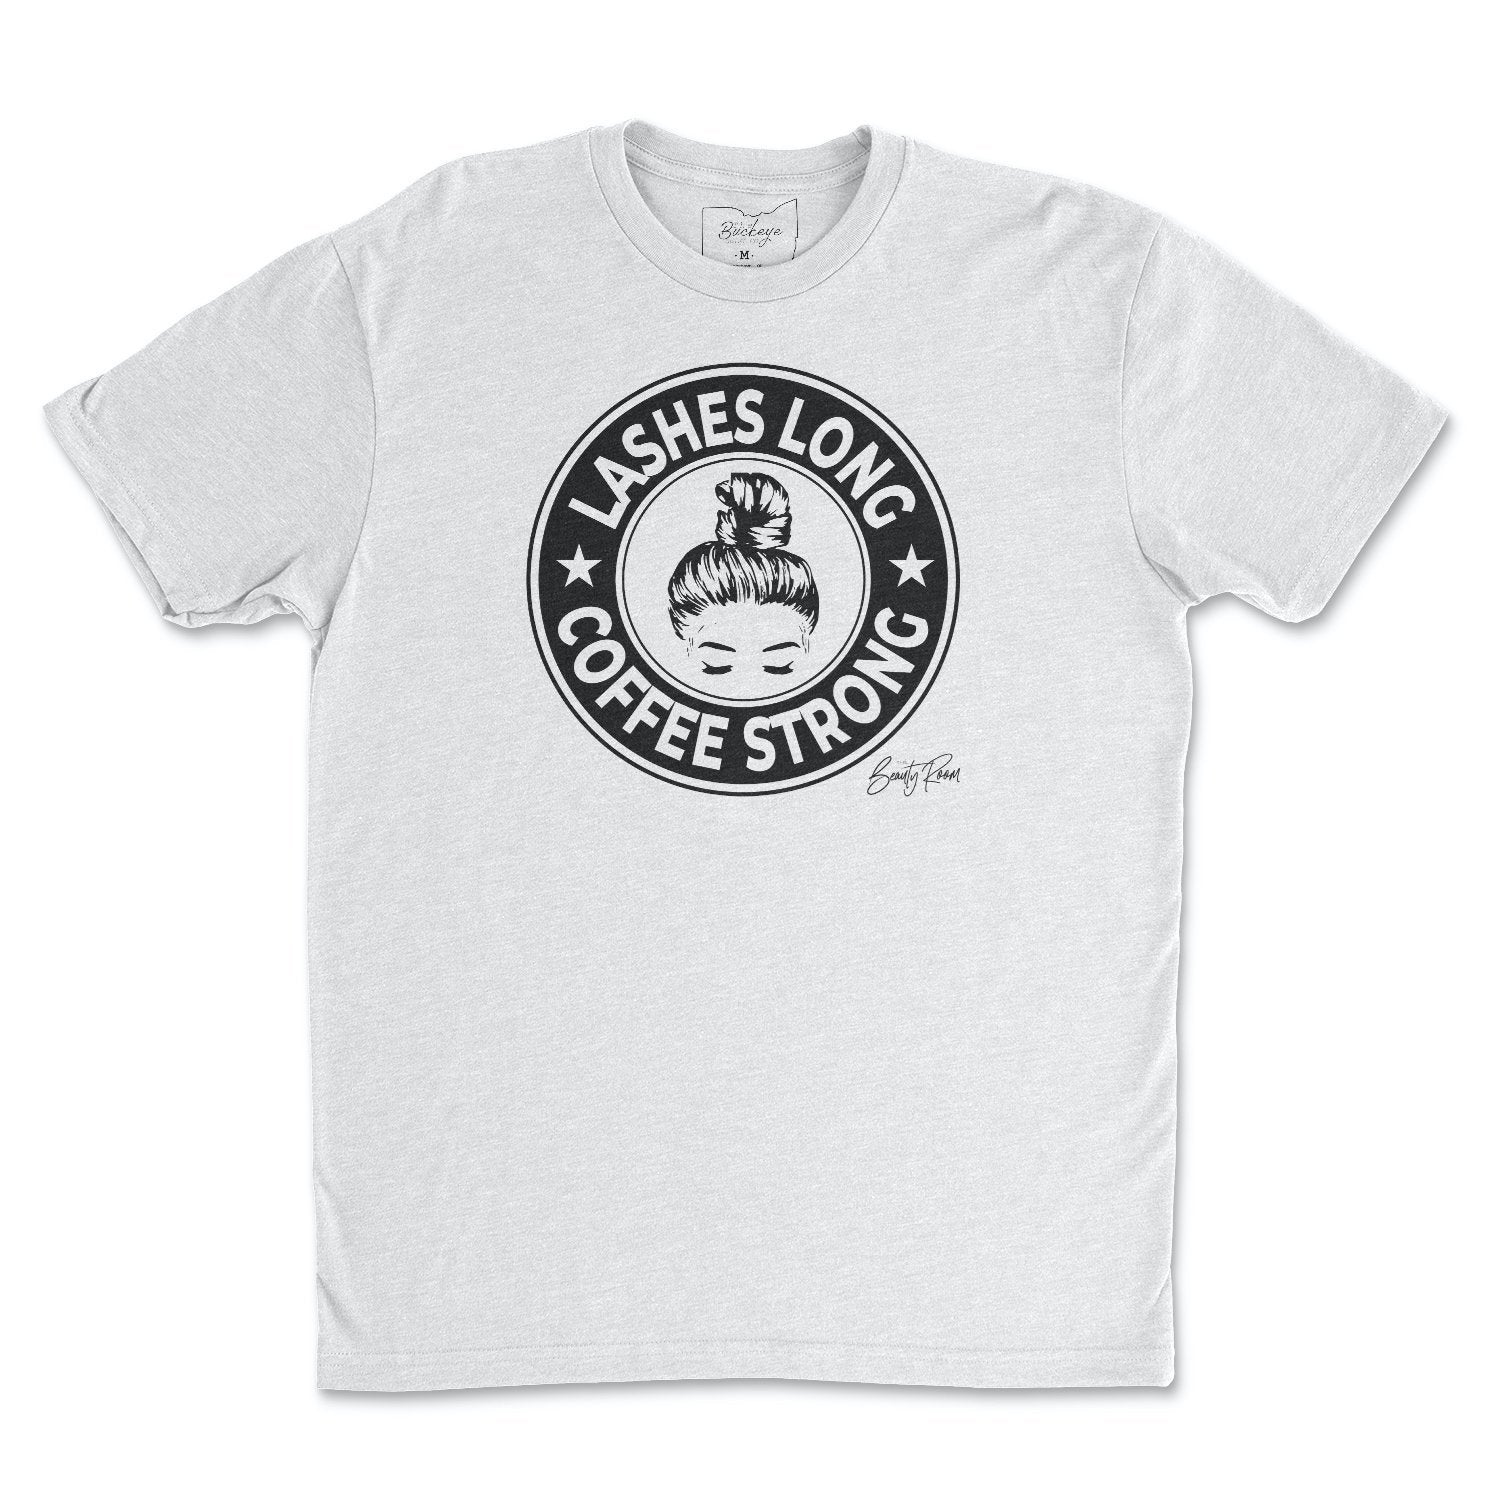 Lashes Long Coffee Strong Black Design T-Shirt - Buckeye Shirt Co.